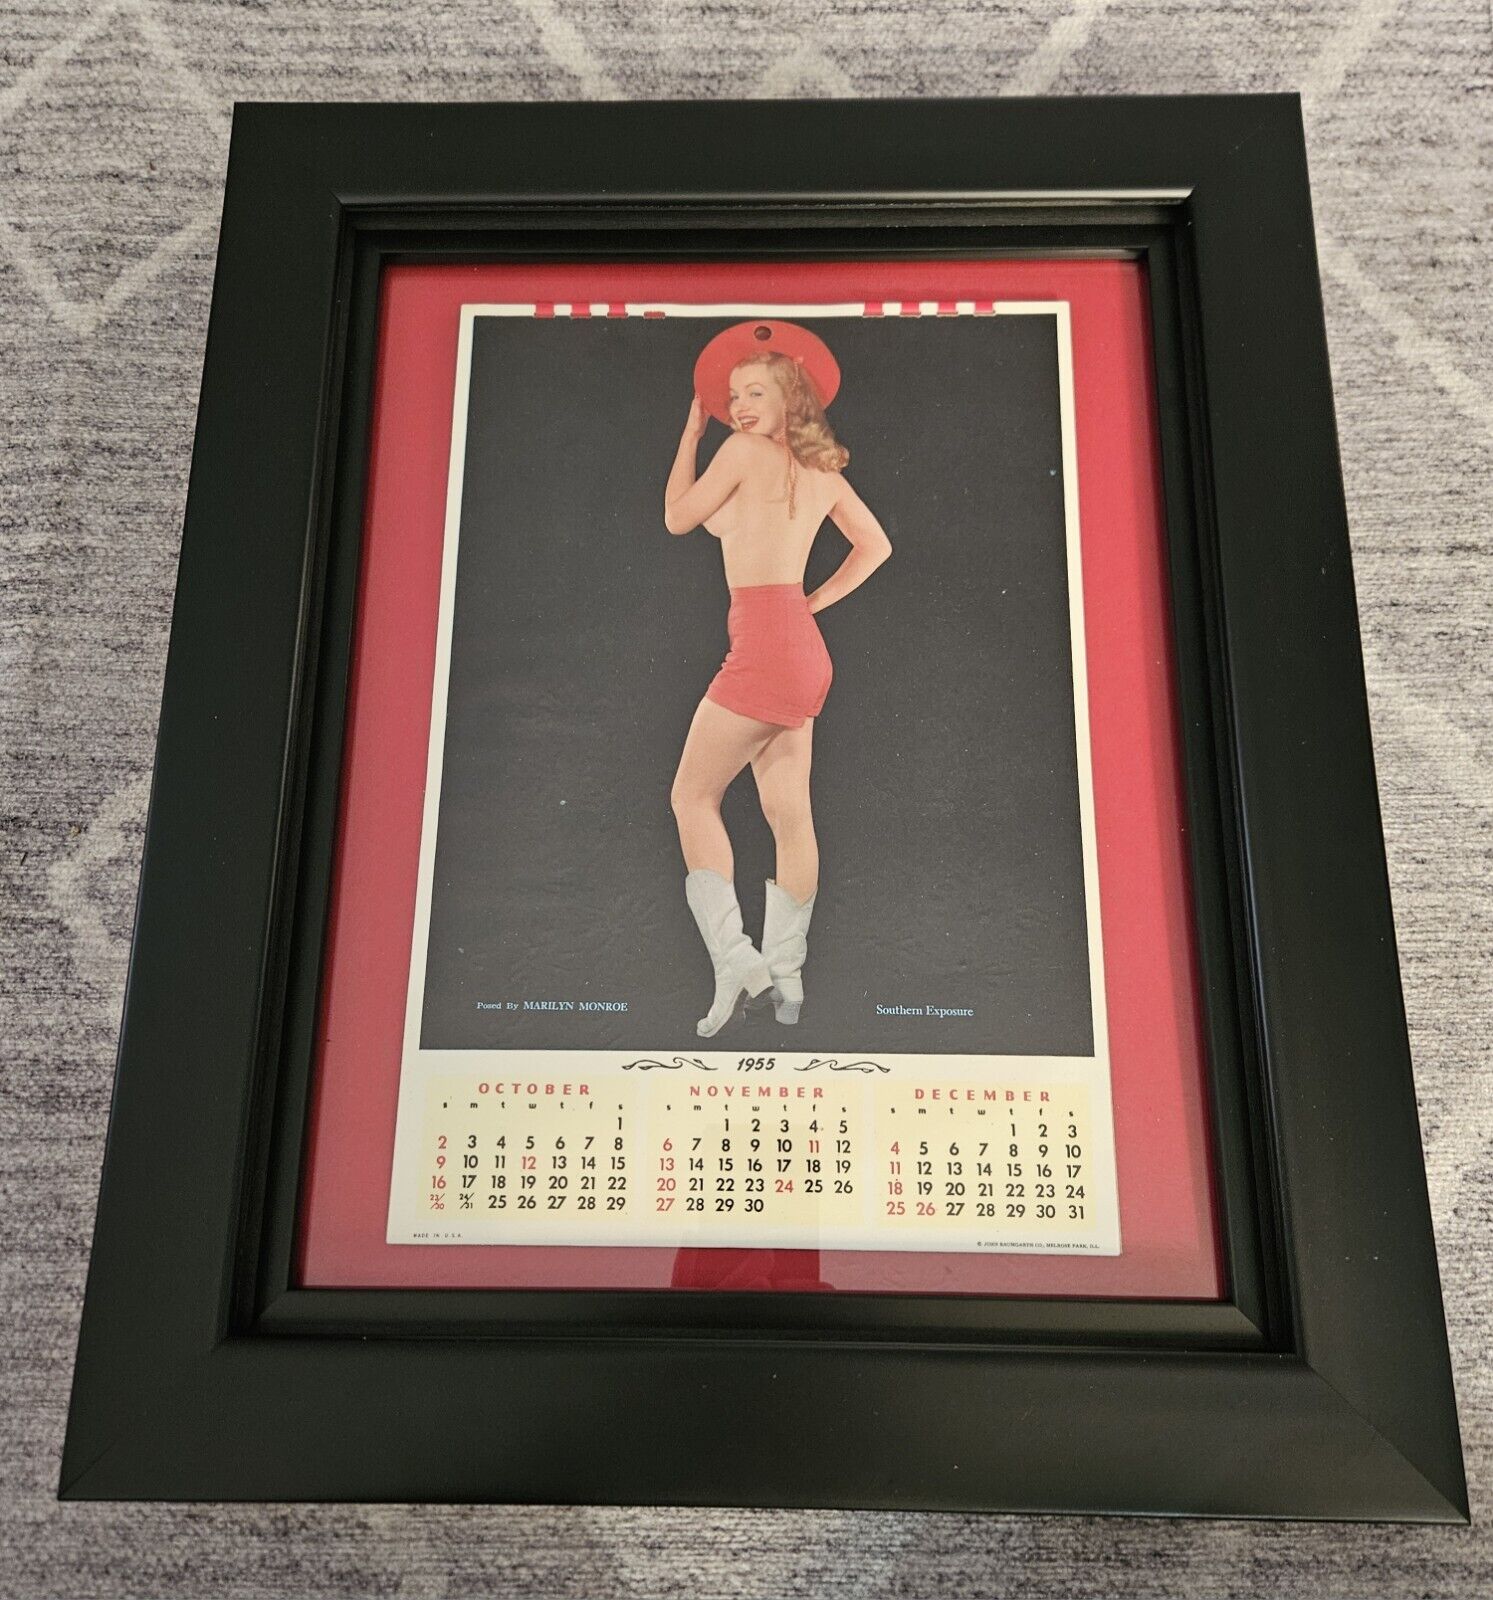 Framed MARILYN MONROE 1955 Original PIN-UP Calendar with Original Sheet.